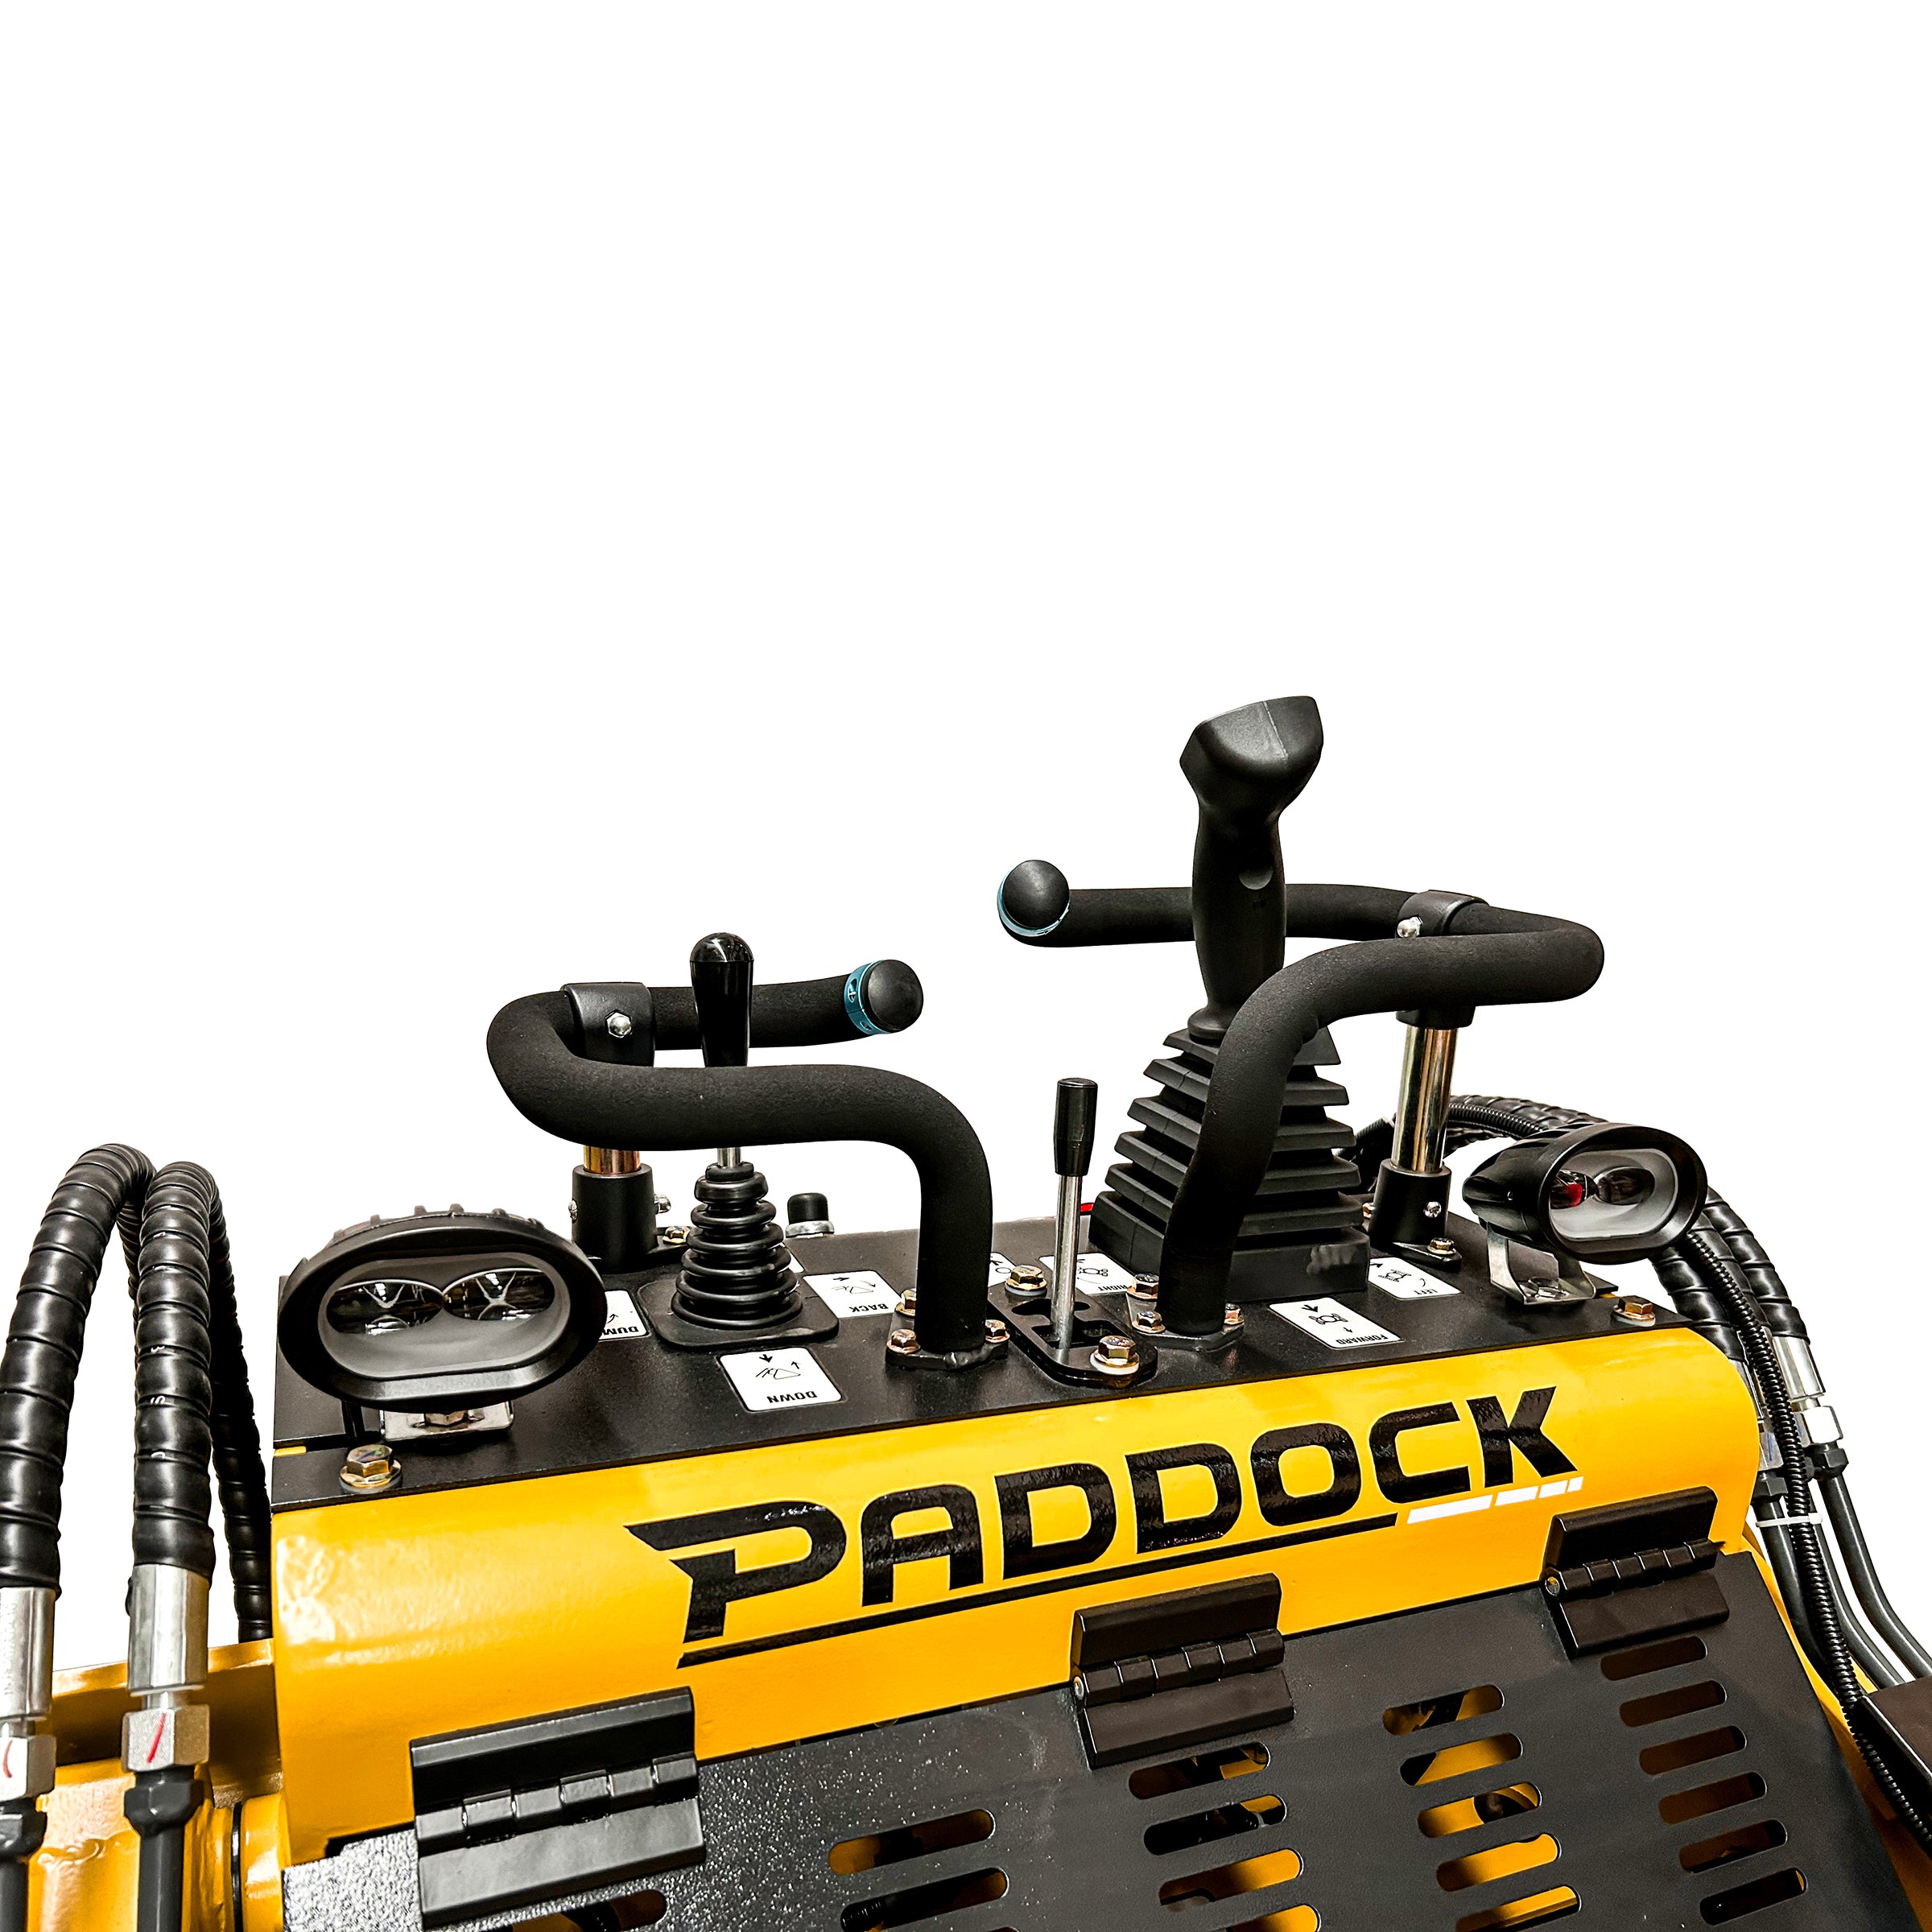 Paddock small petrol engine loader machine